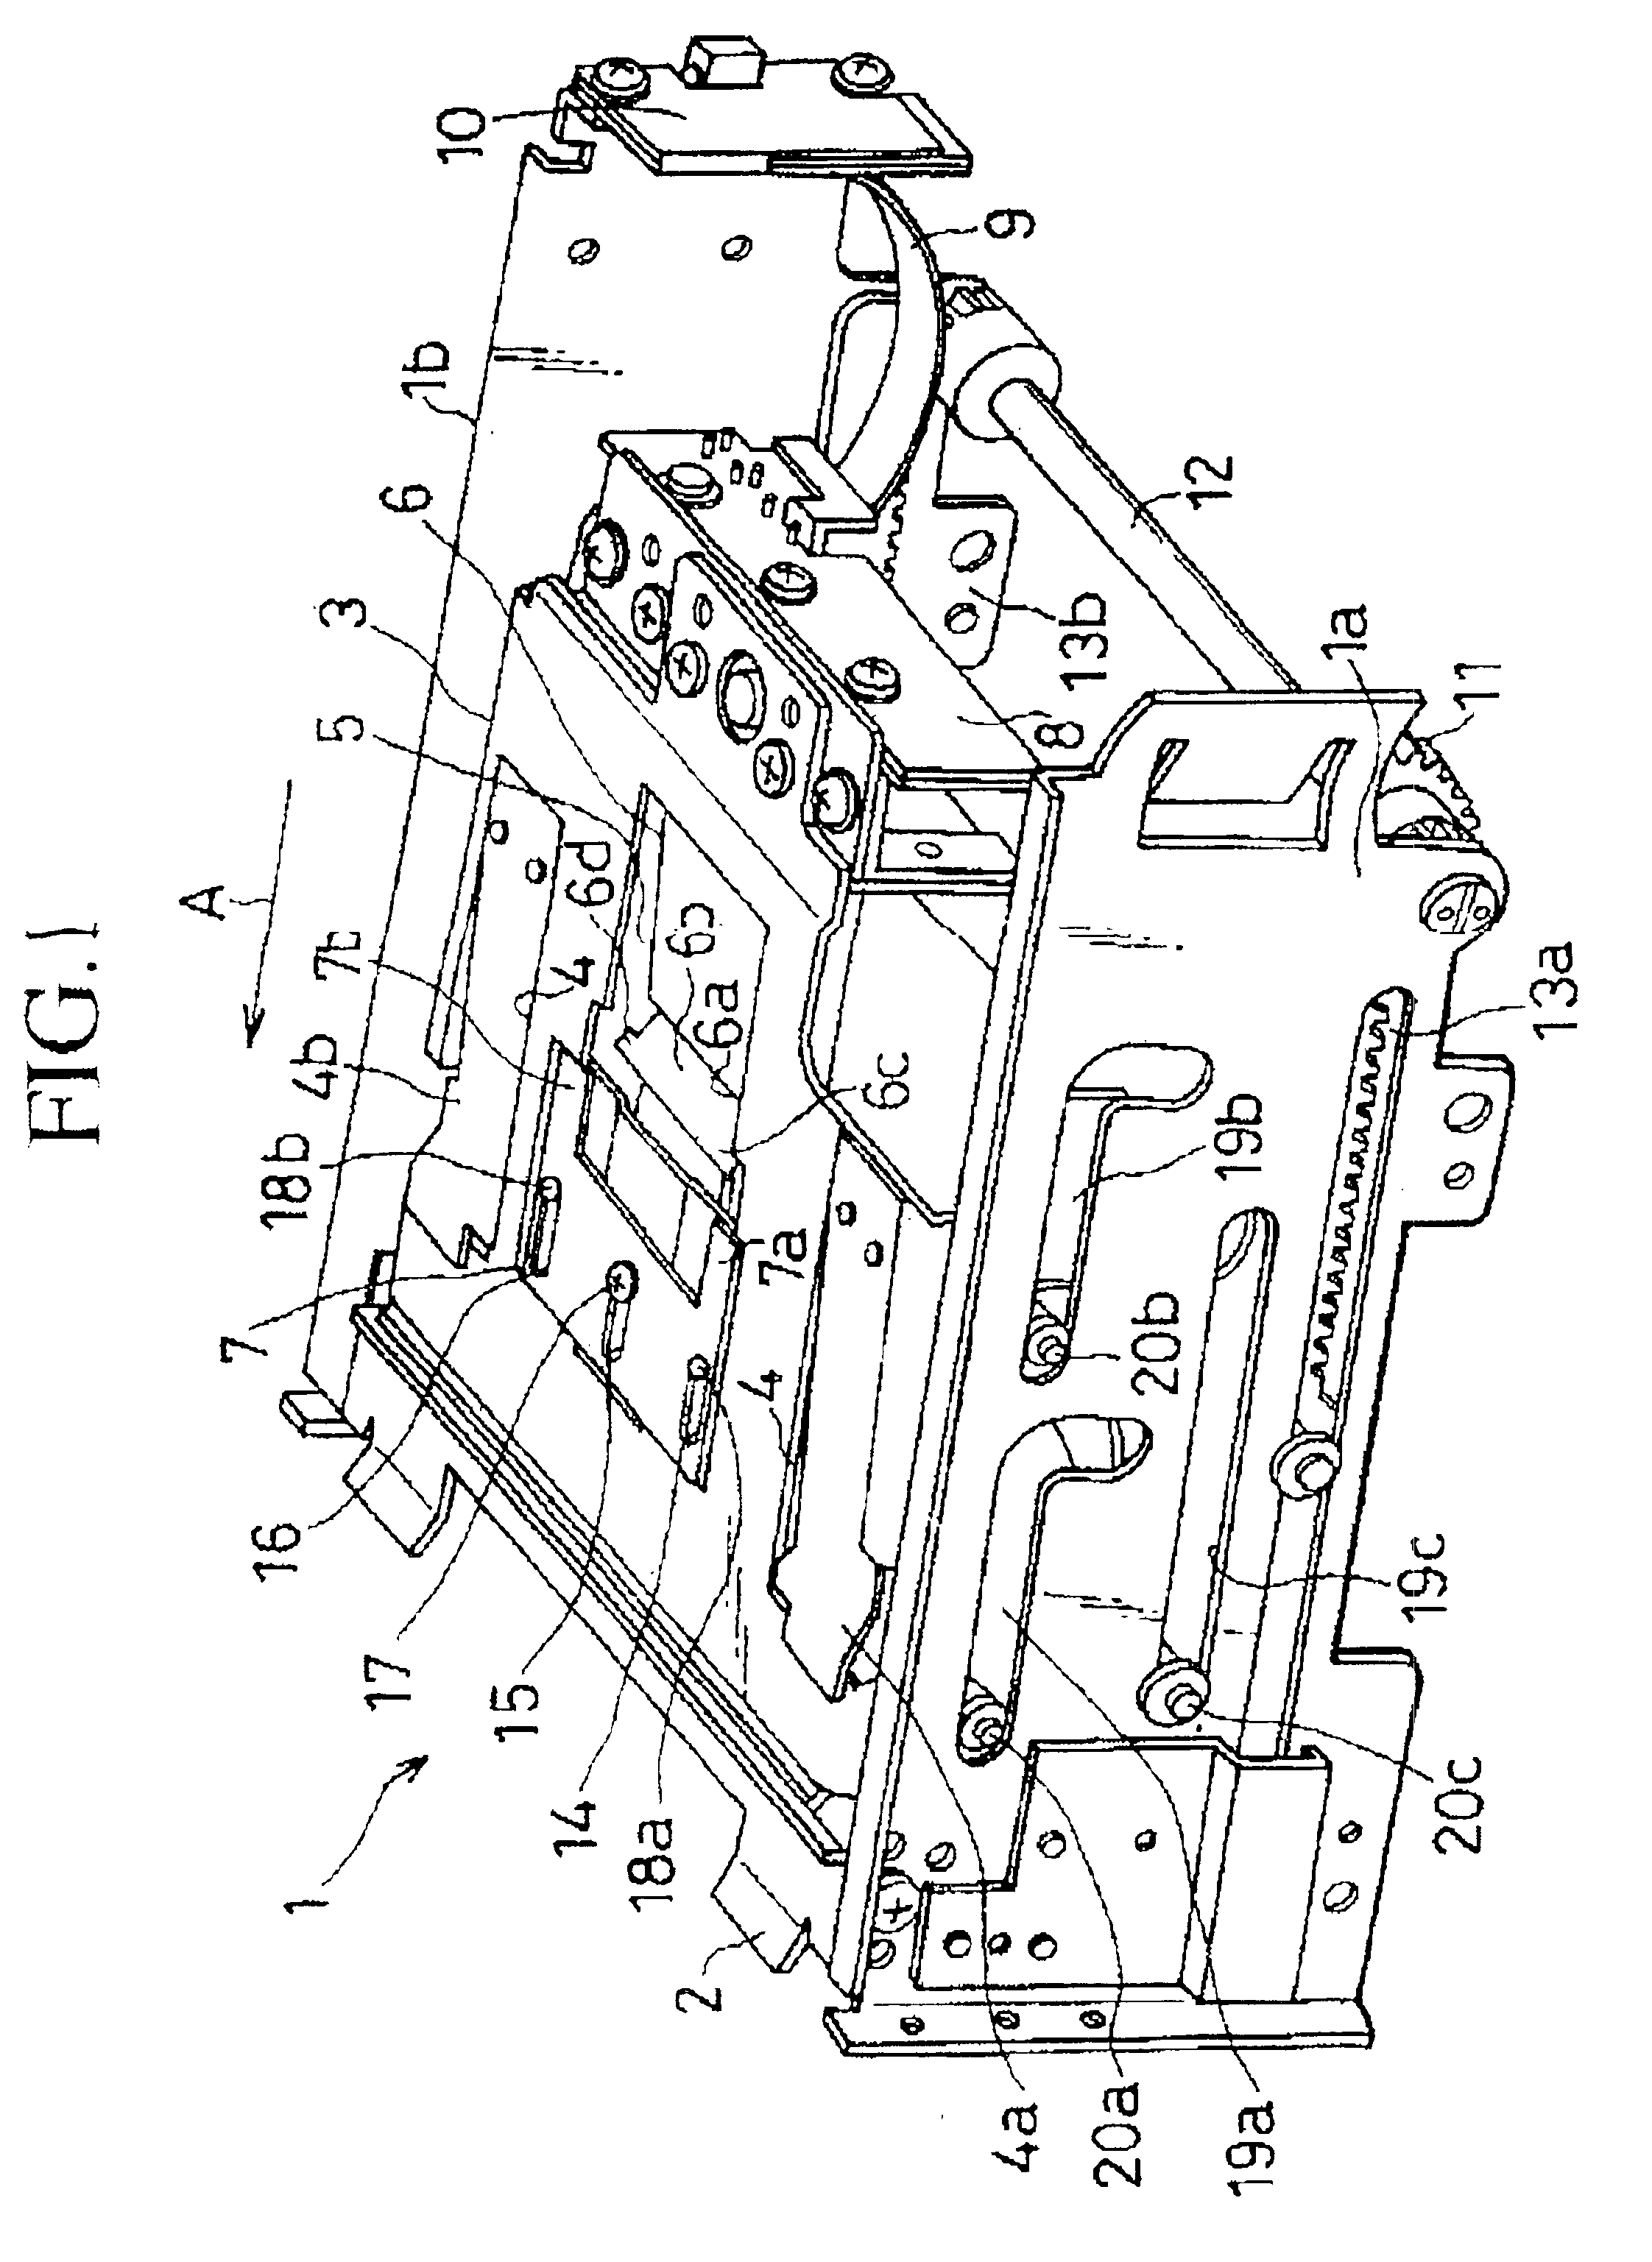 Loading mechanism of storage device